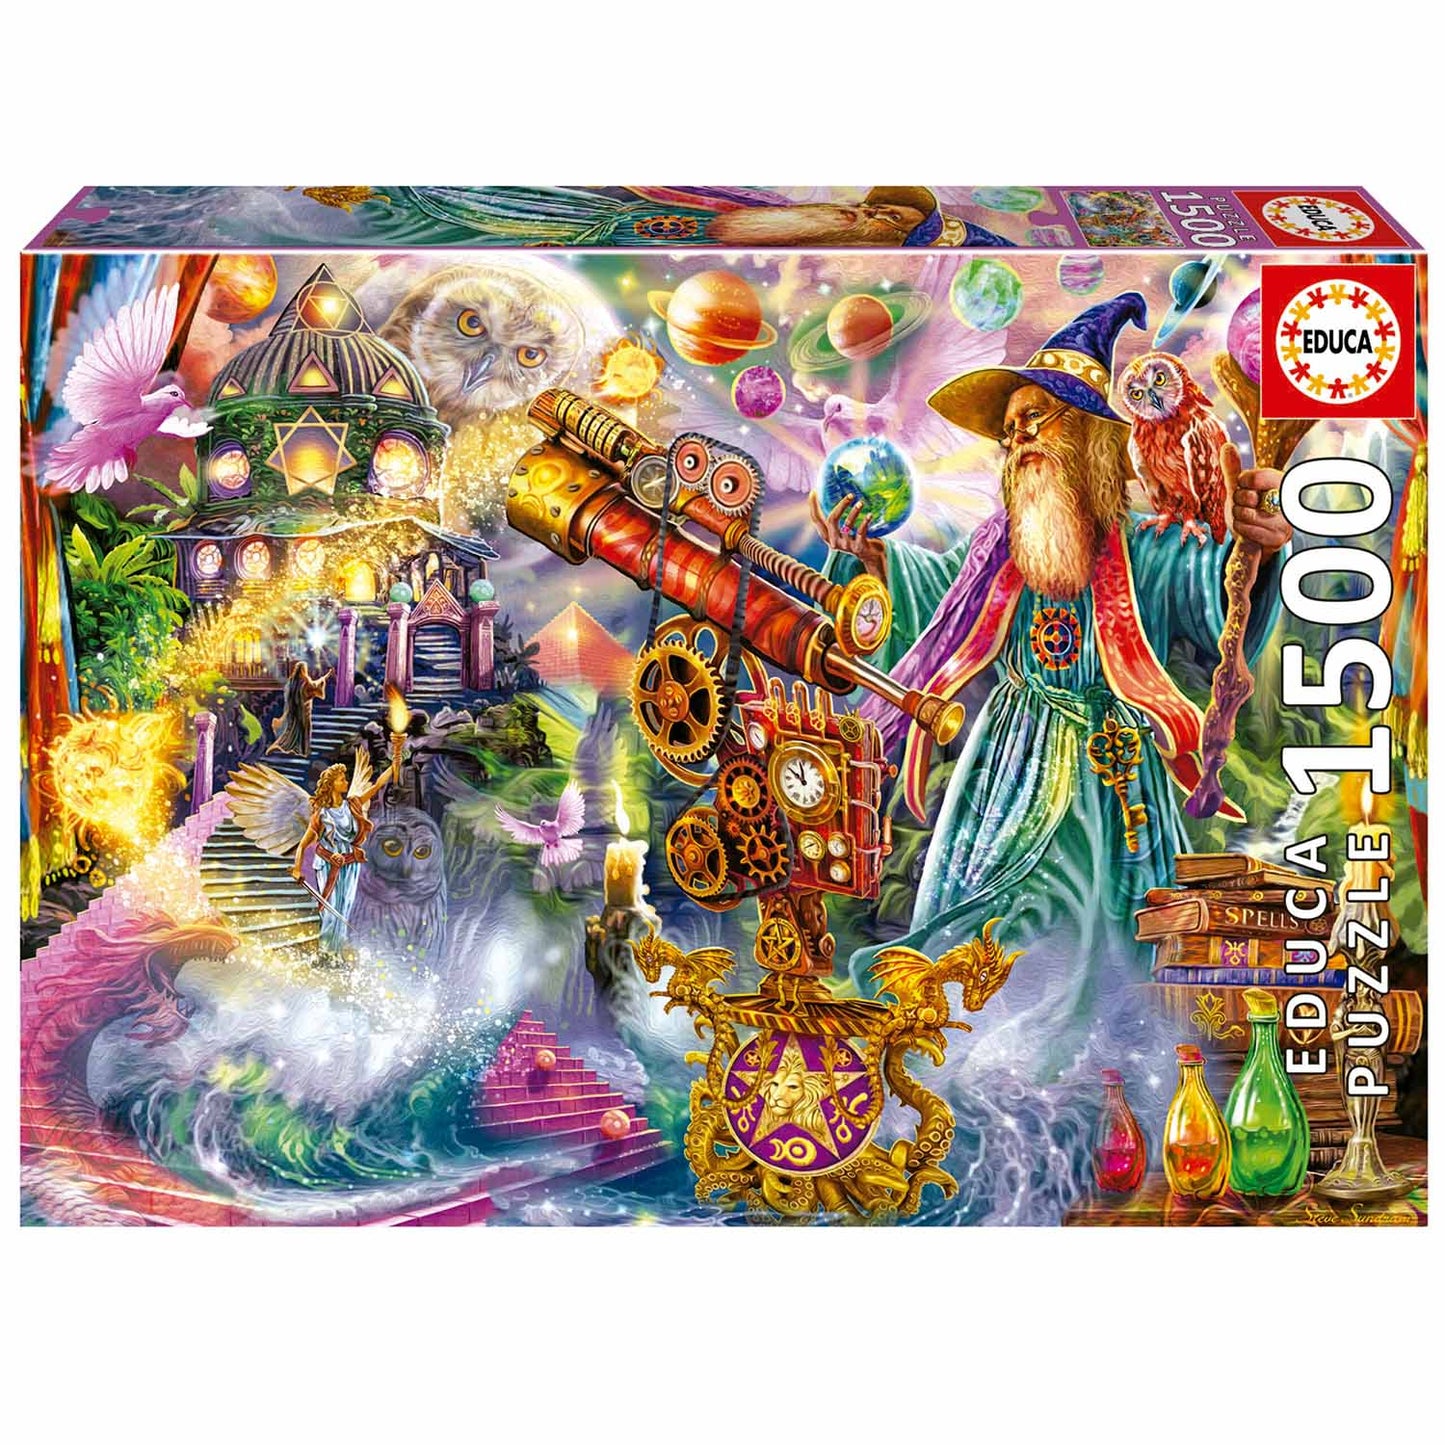 Wizards Spell by Steve Sundram, 1500 Piece Puzzle